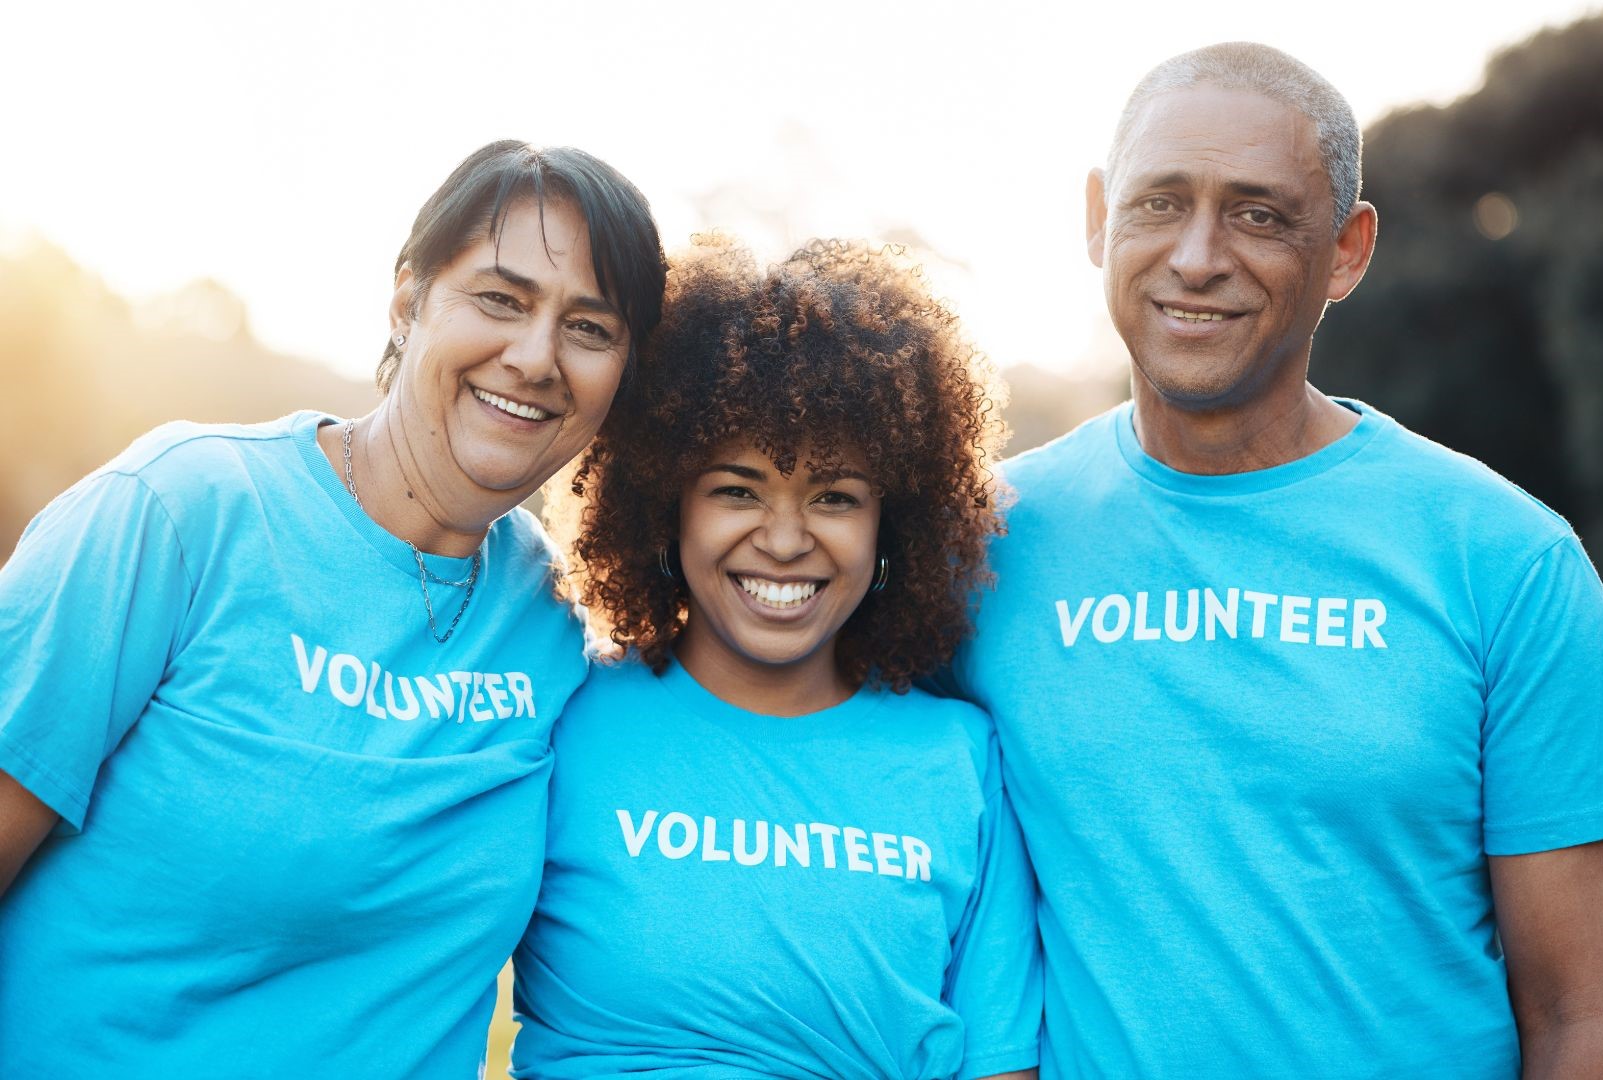 Three people wearing volunteer shirts